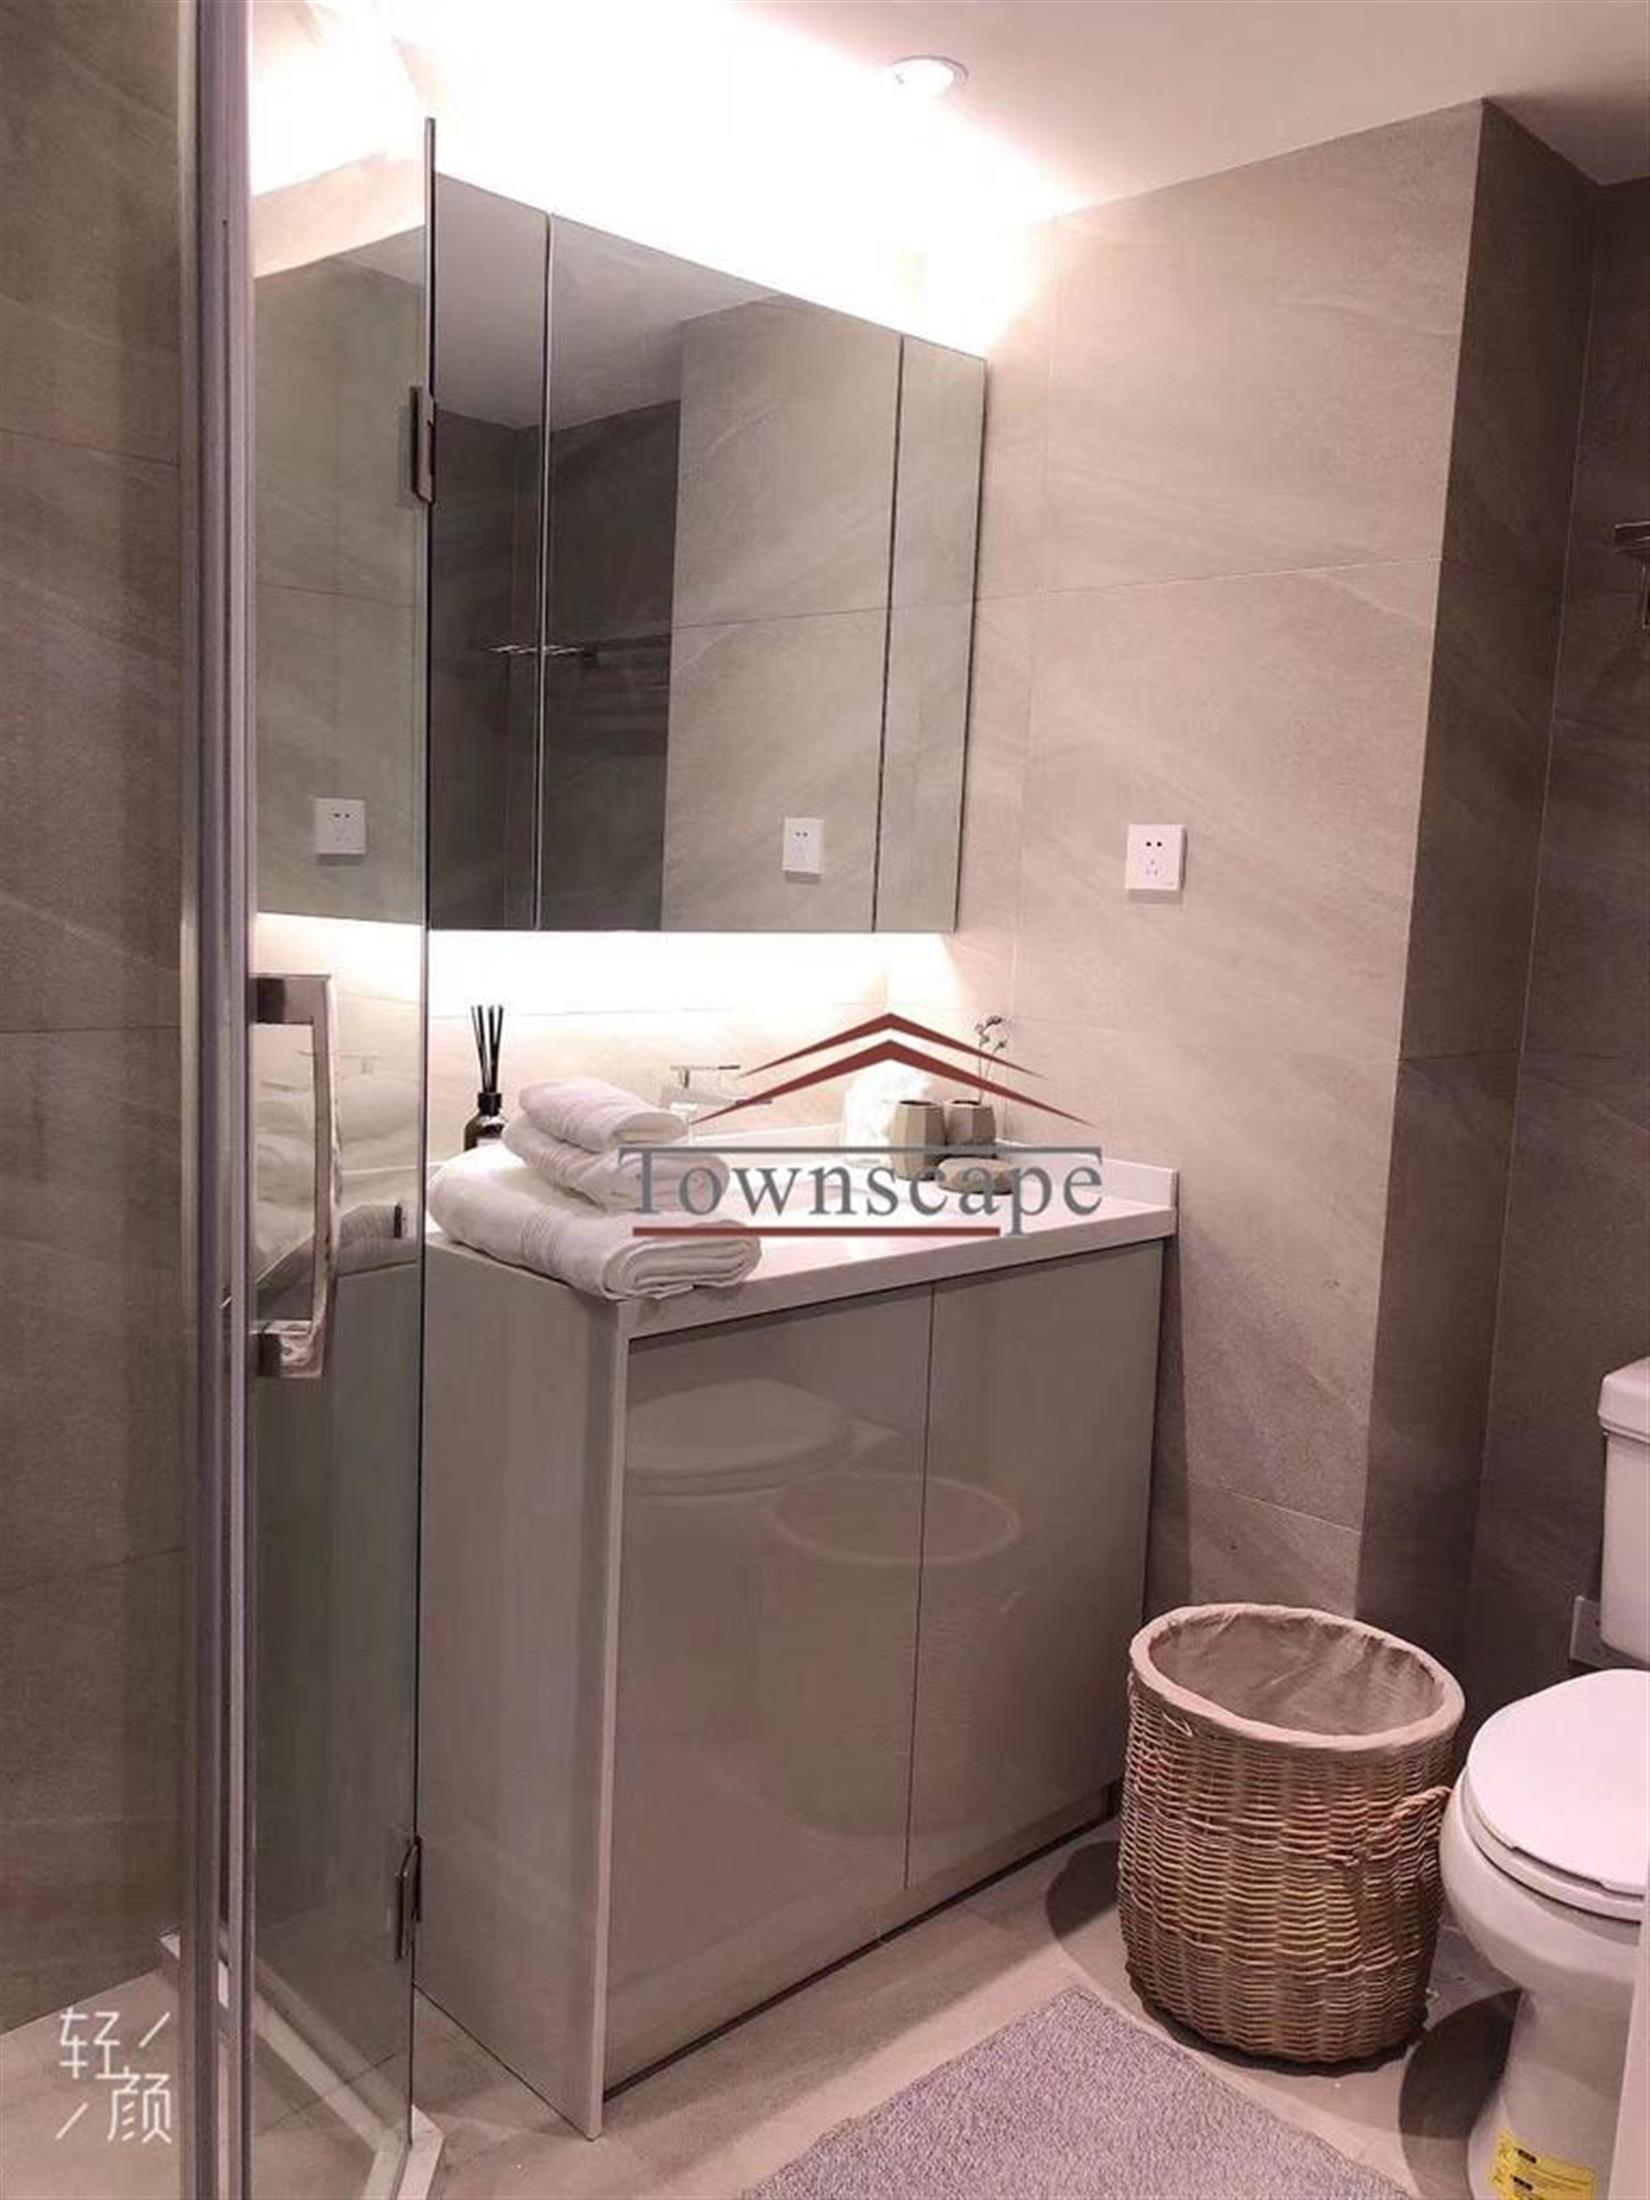 clean bathroom New Gorgeous Spacious Modern High-Quality Apt nr SH Library for Rent